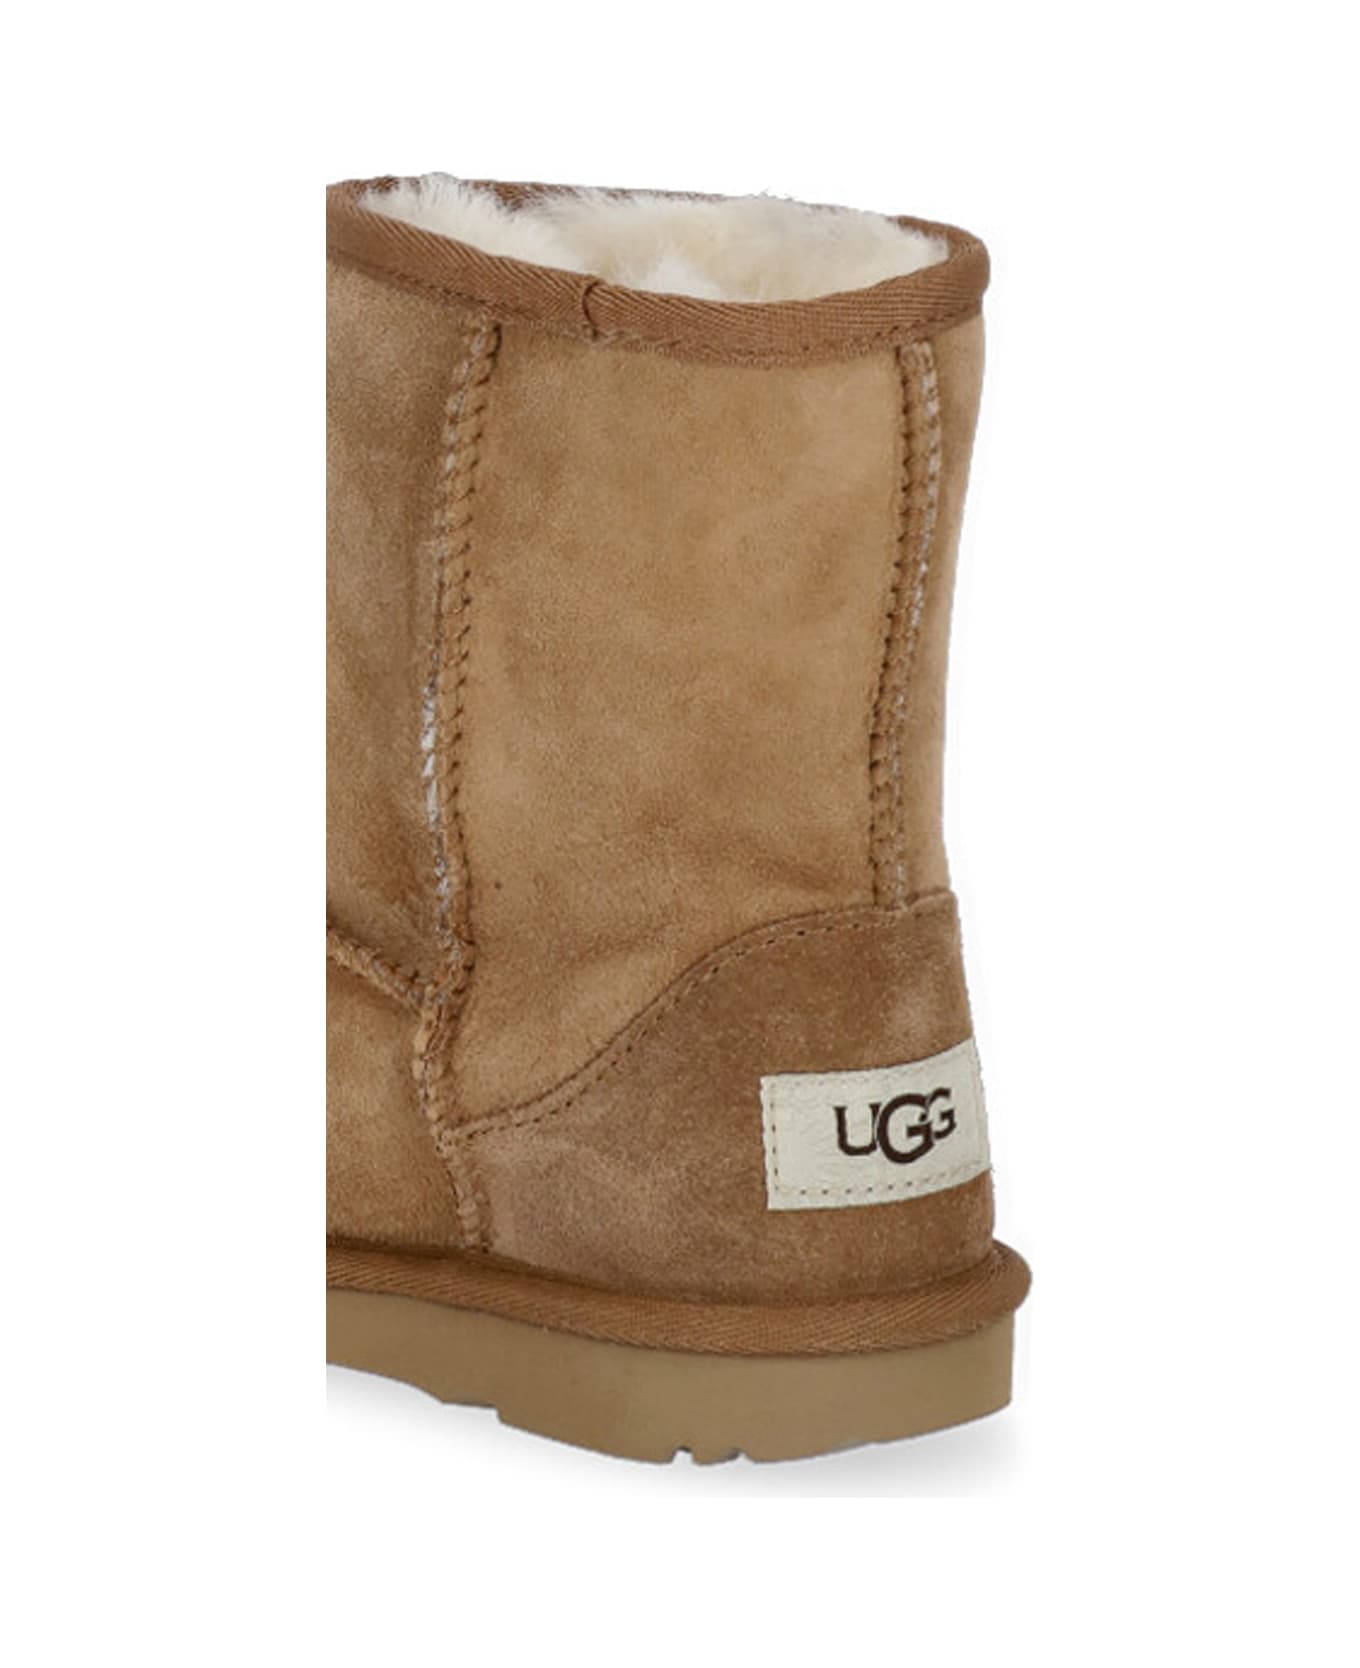 UGG Classic Ii Boots - Brown